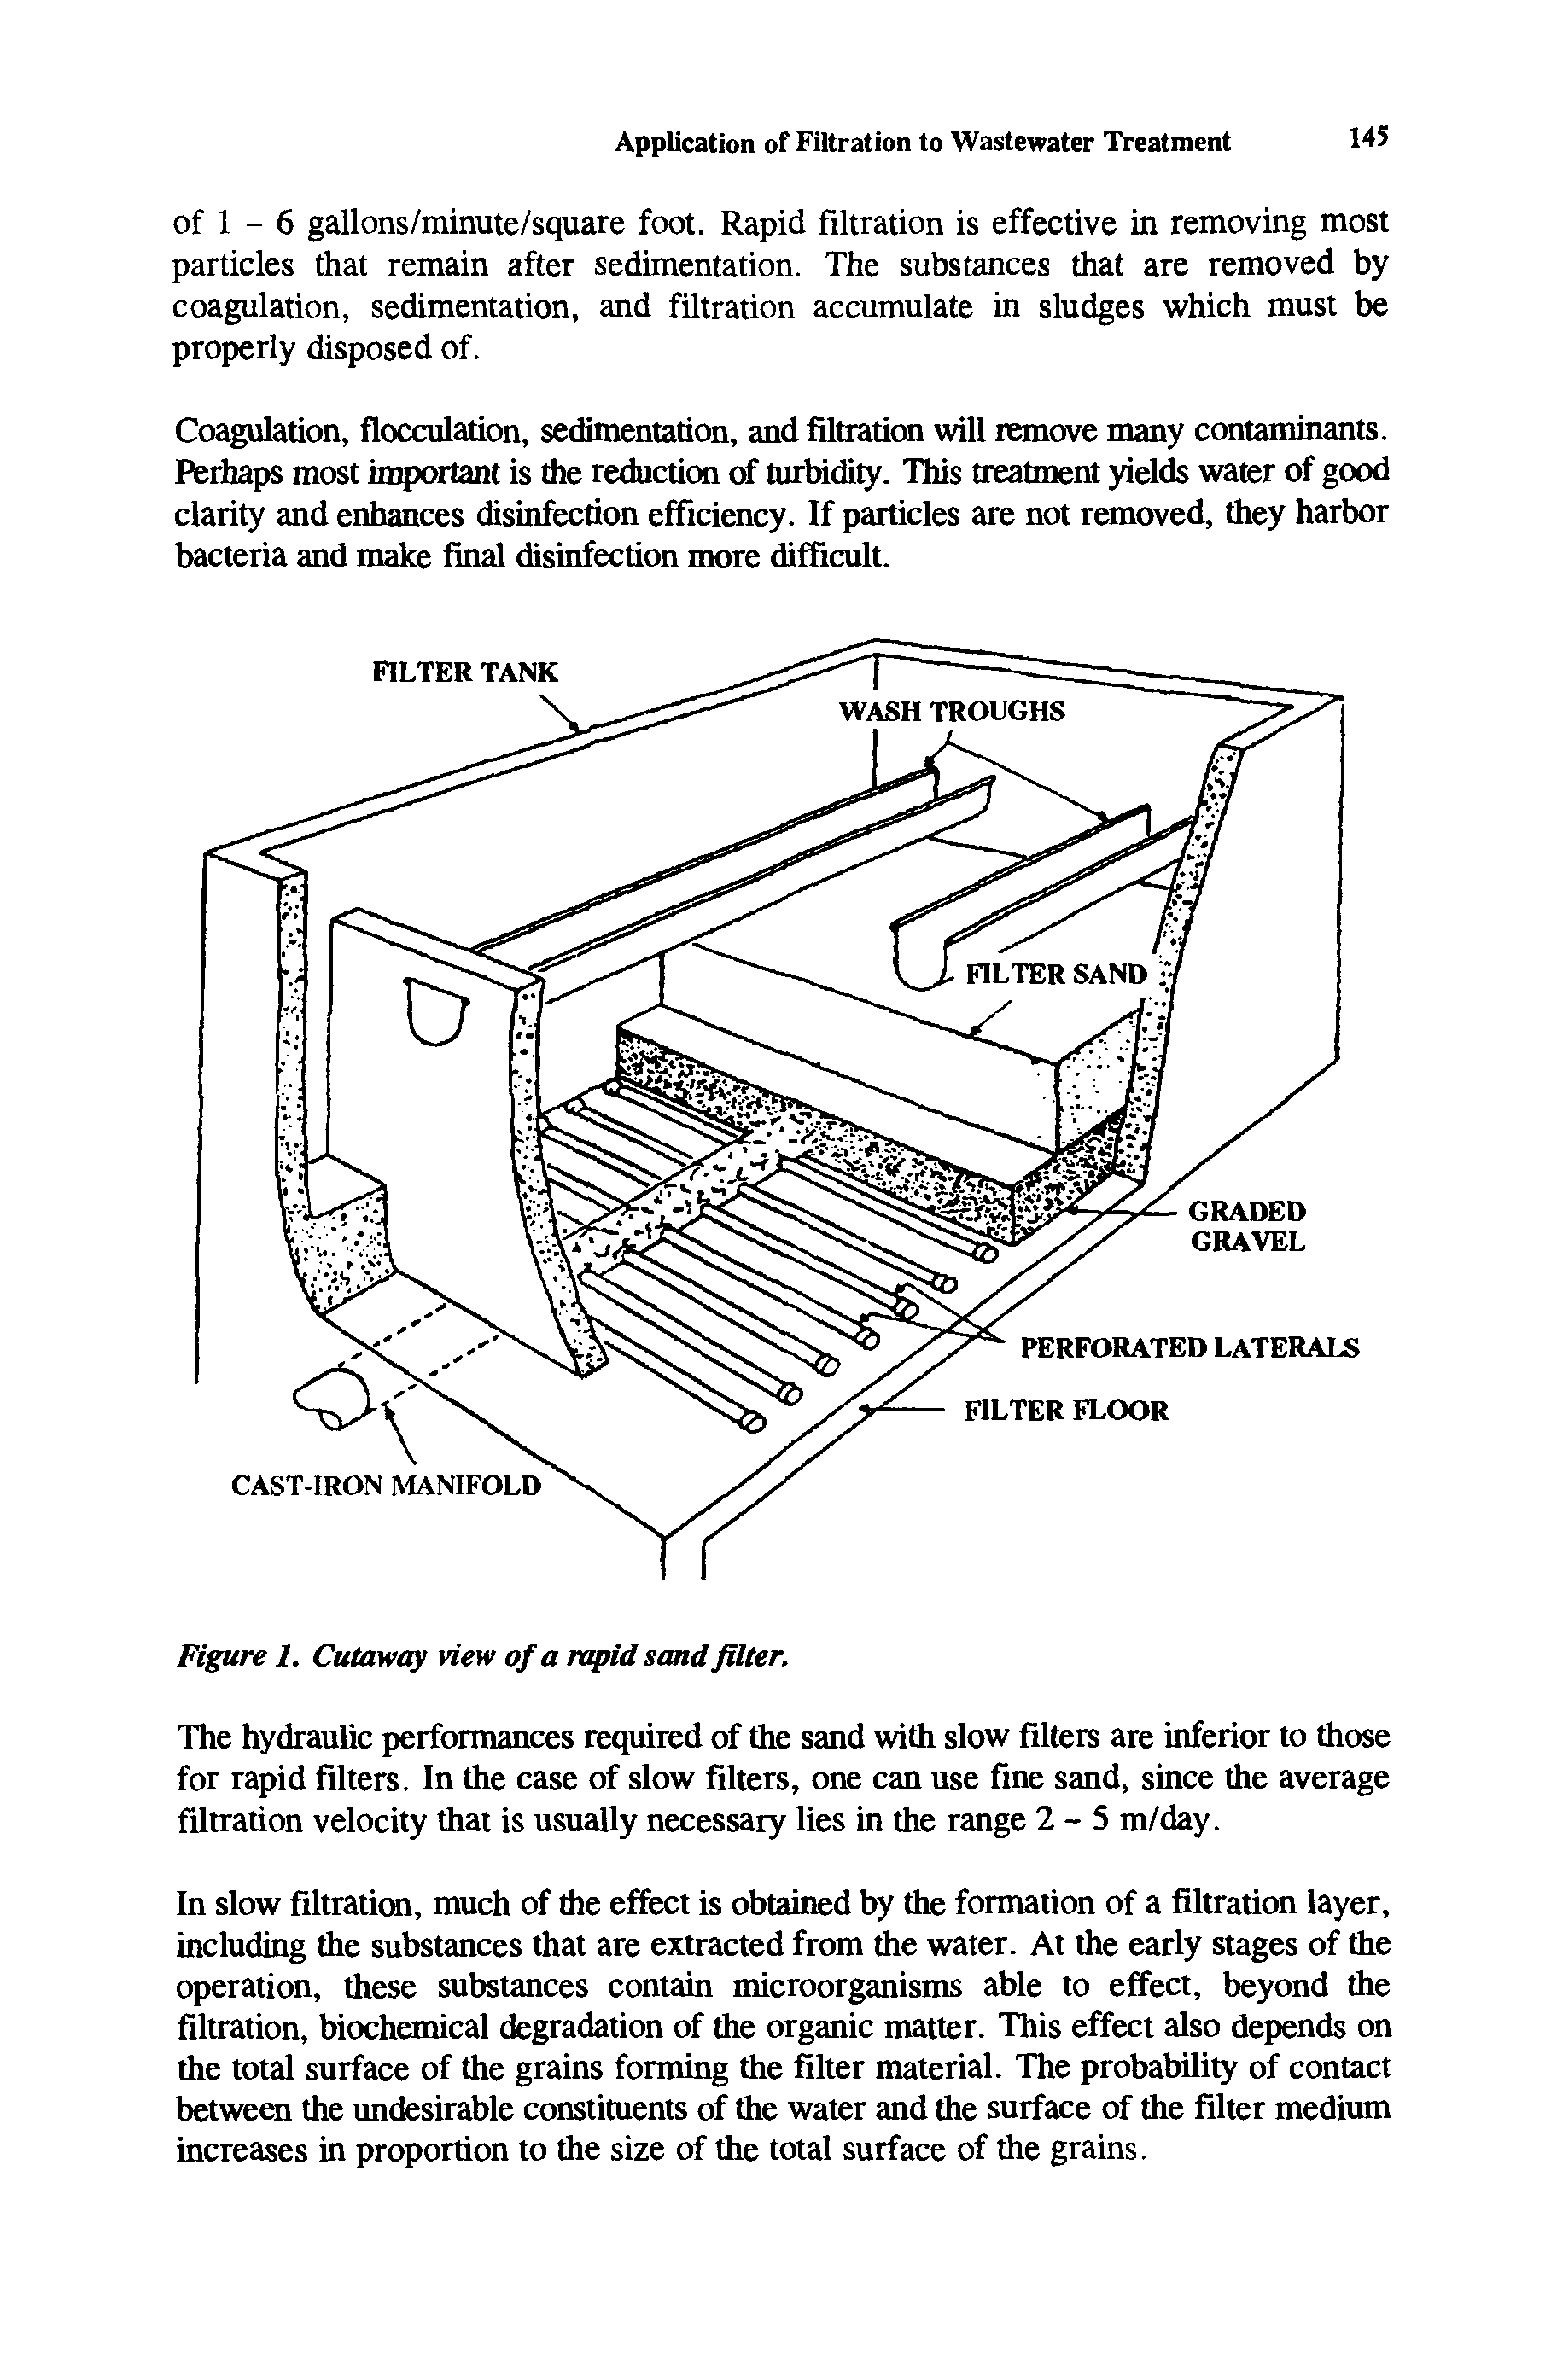 Figure 1. CutawtQf view of a rapid sand filter.